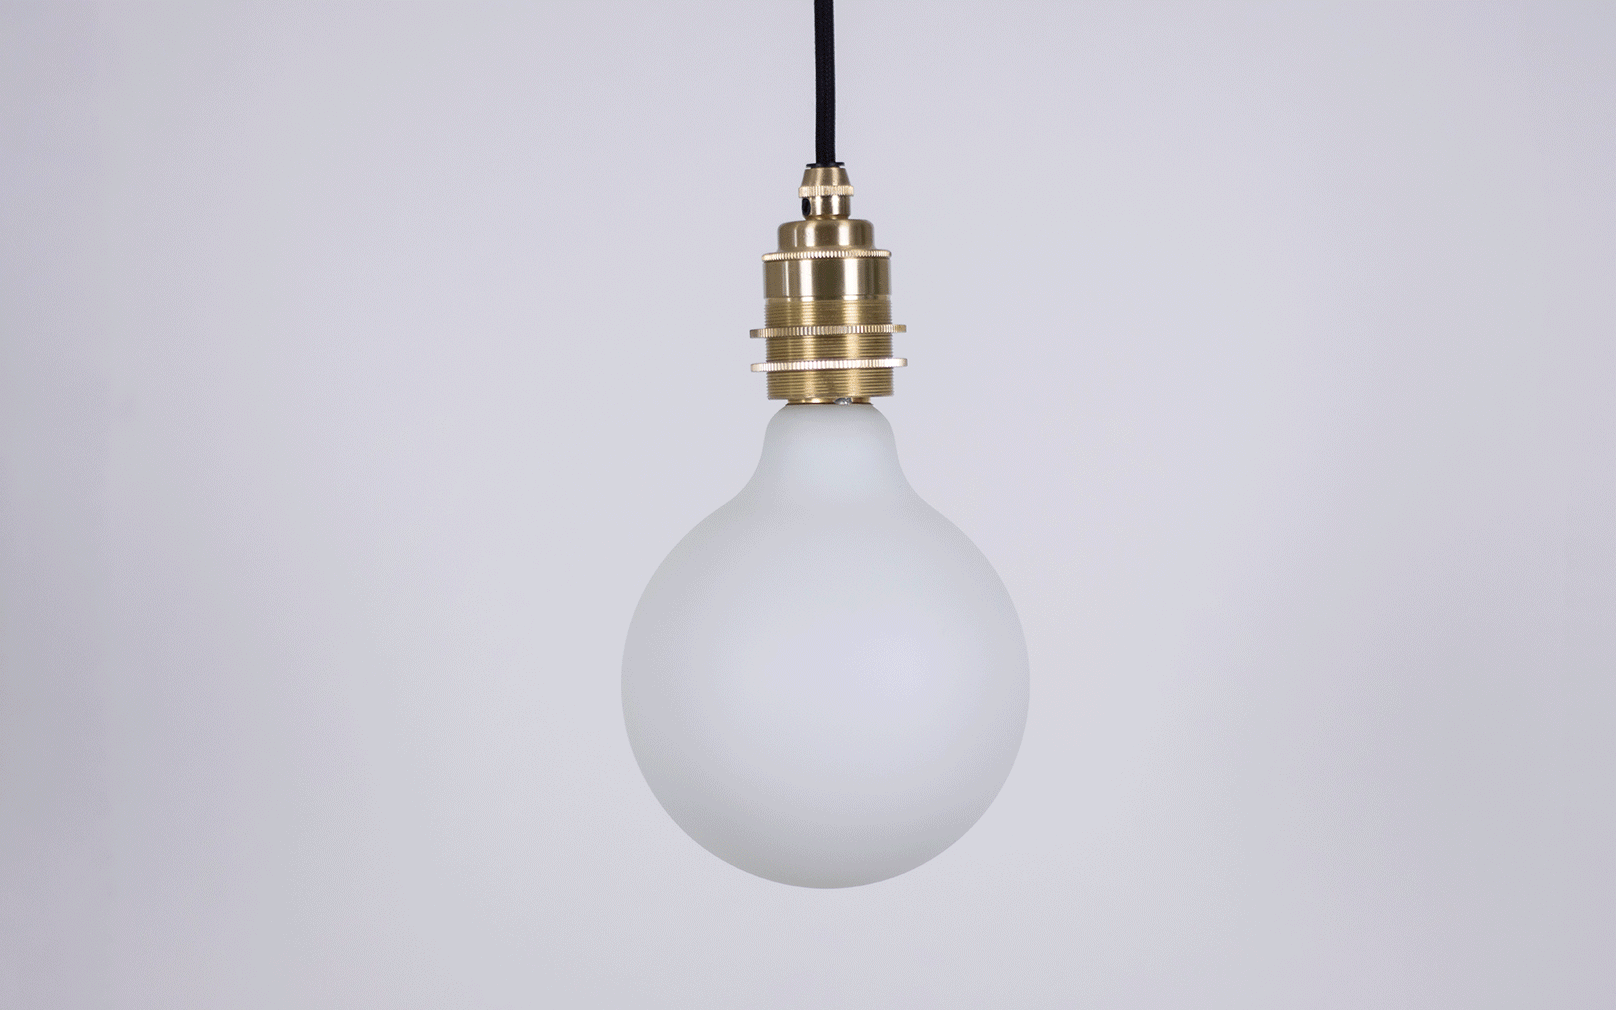 Tala Porcelain III 6W LED Light Bulb